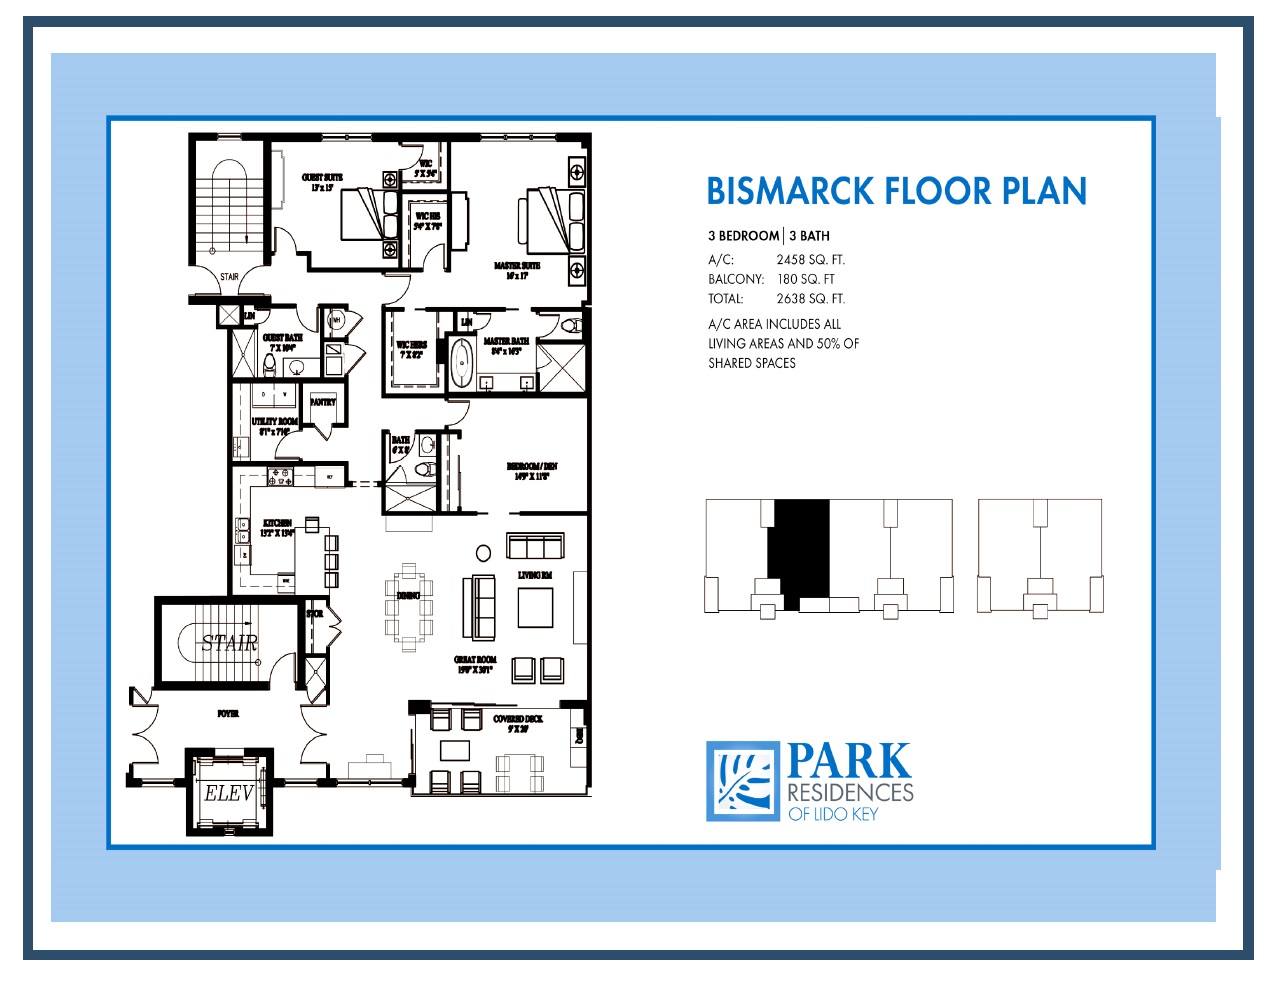 Bizmarck Floor Plan Park Residences of Lido Key